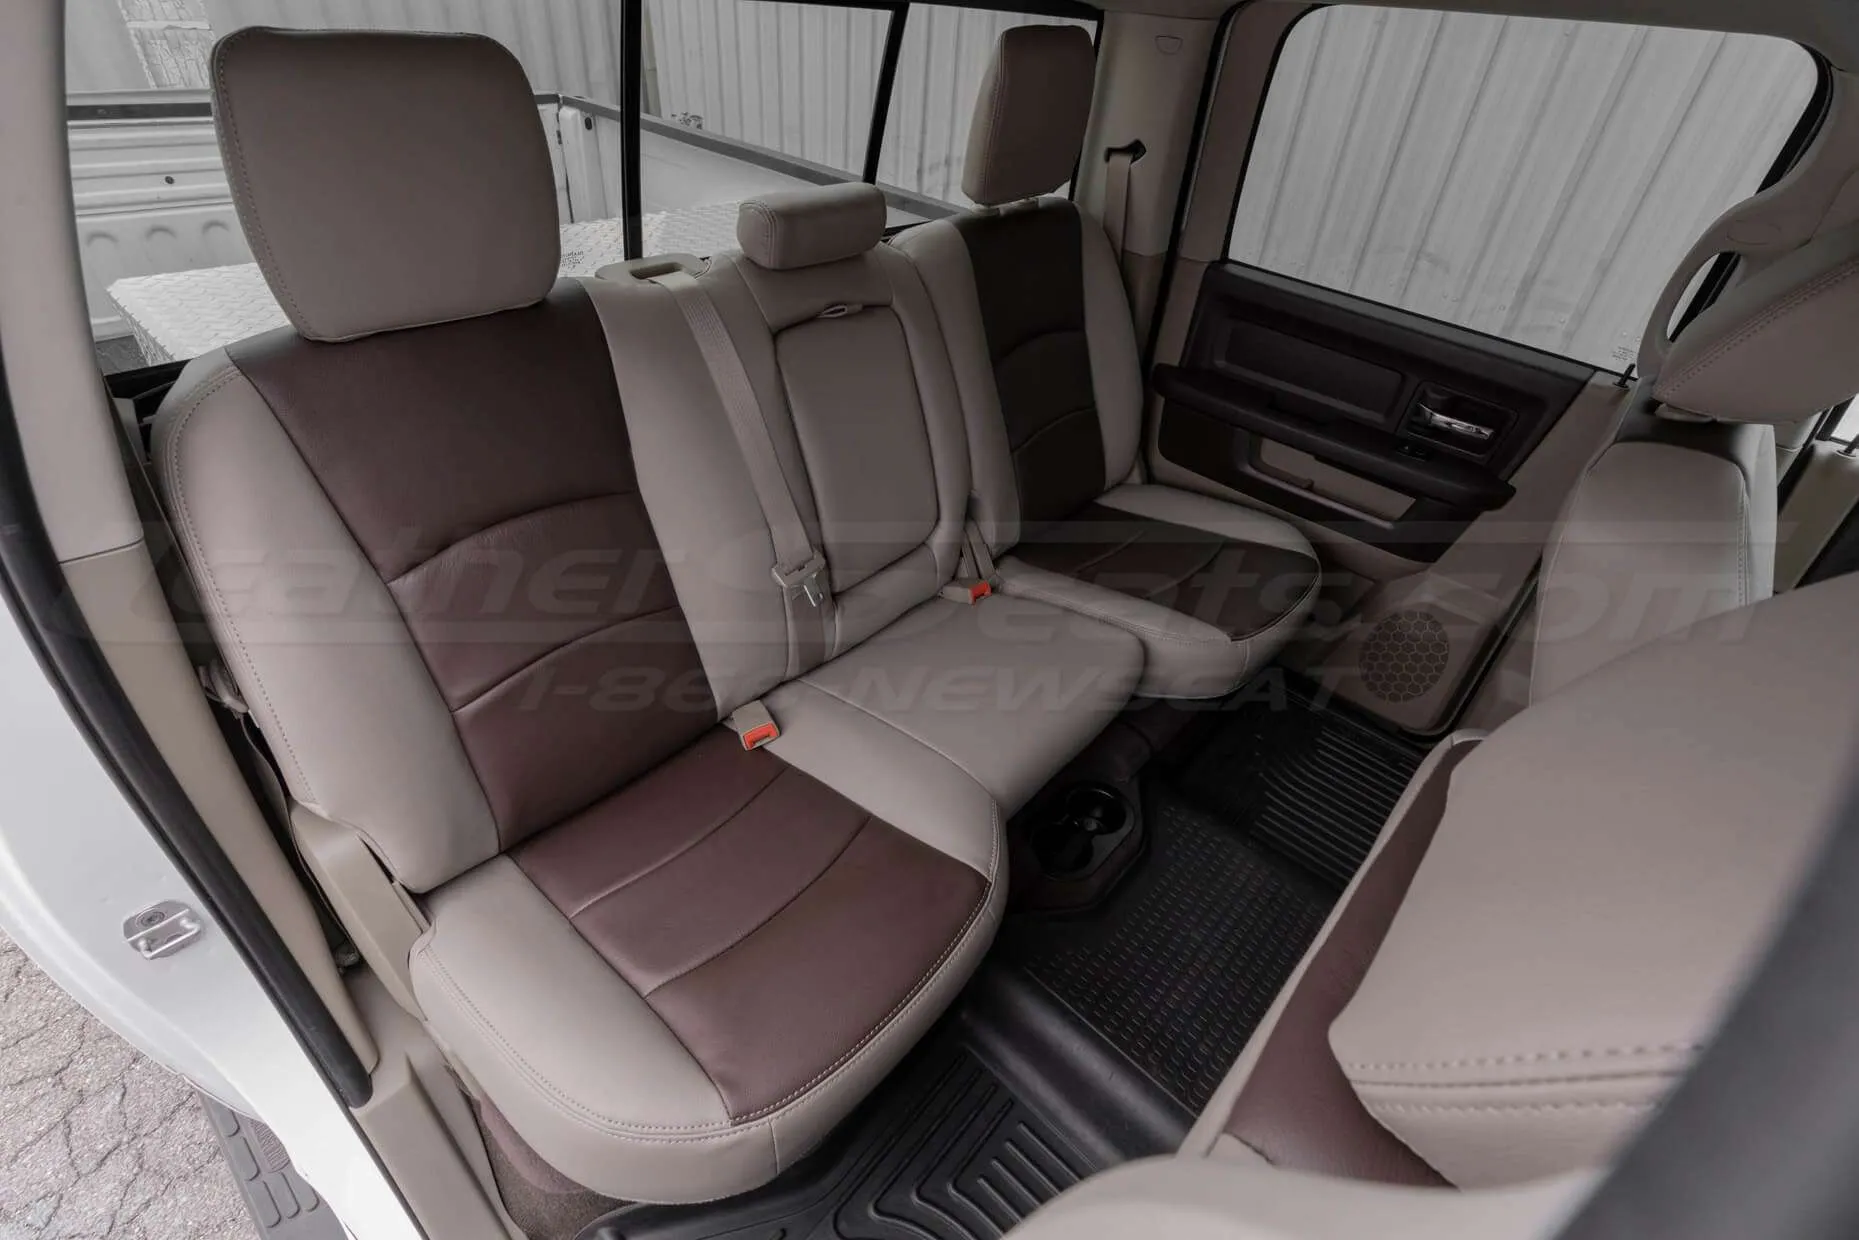 Installed leather back seats - Passenger side